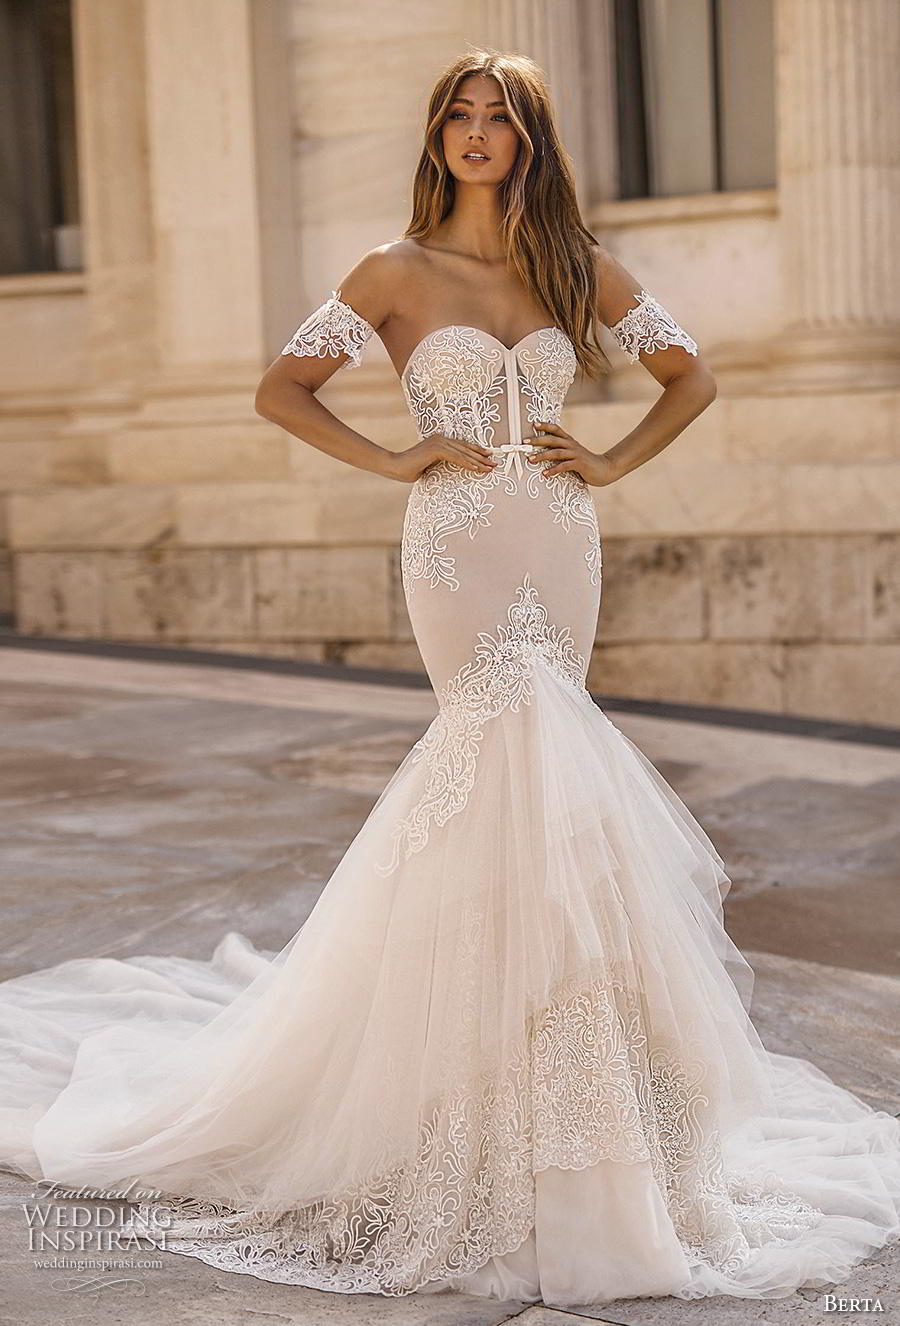 Berta Fall 2019 Wedding Dresses — "Athens" Bridal ...